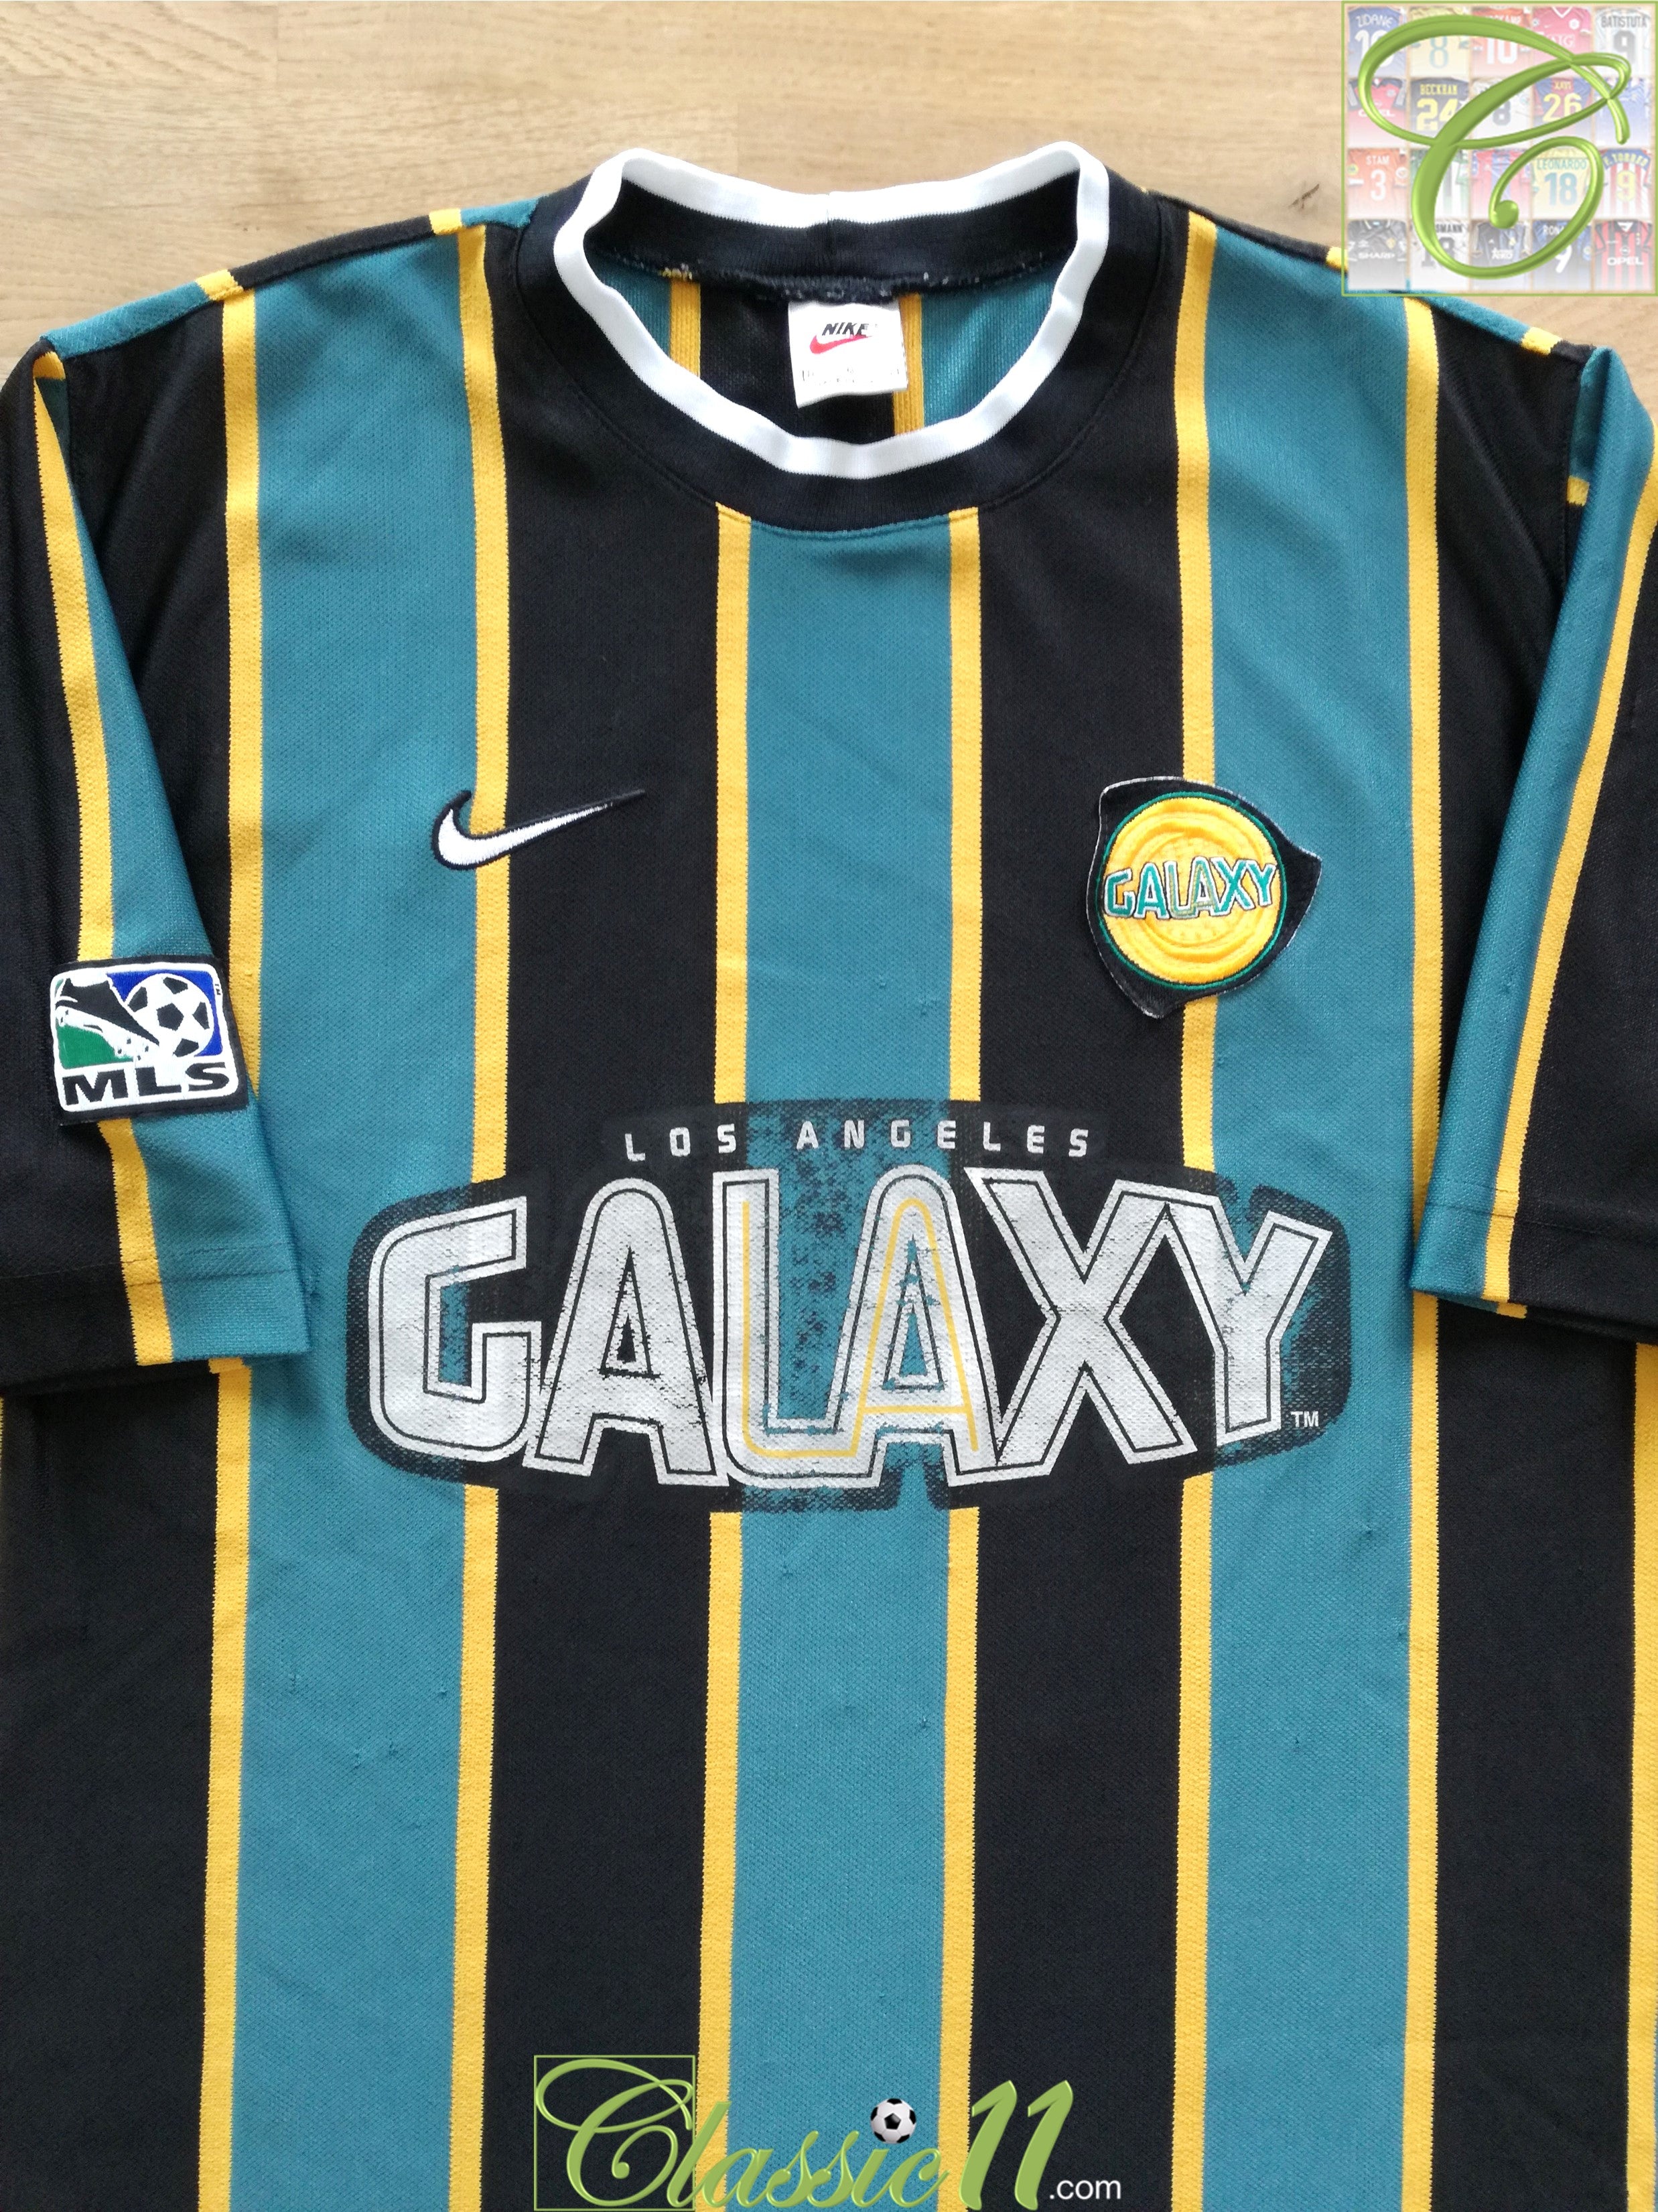 Los Angeles Galaxy Home football shirt 1997 - 1998.